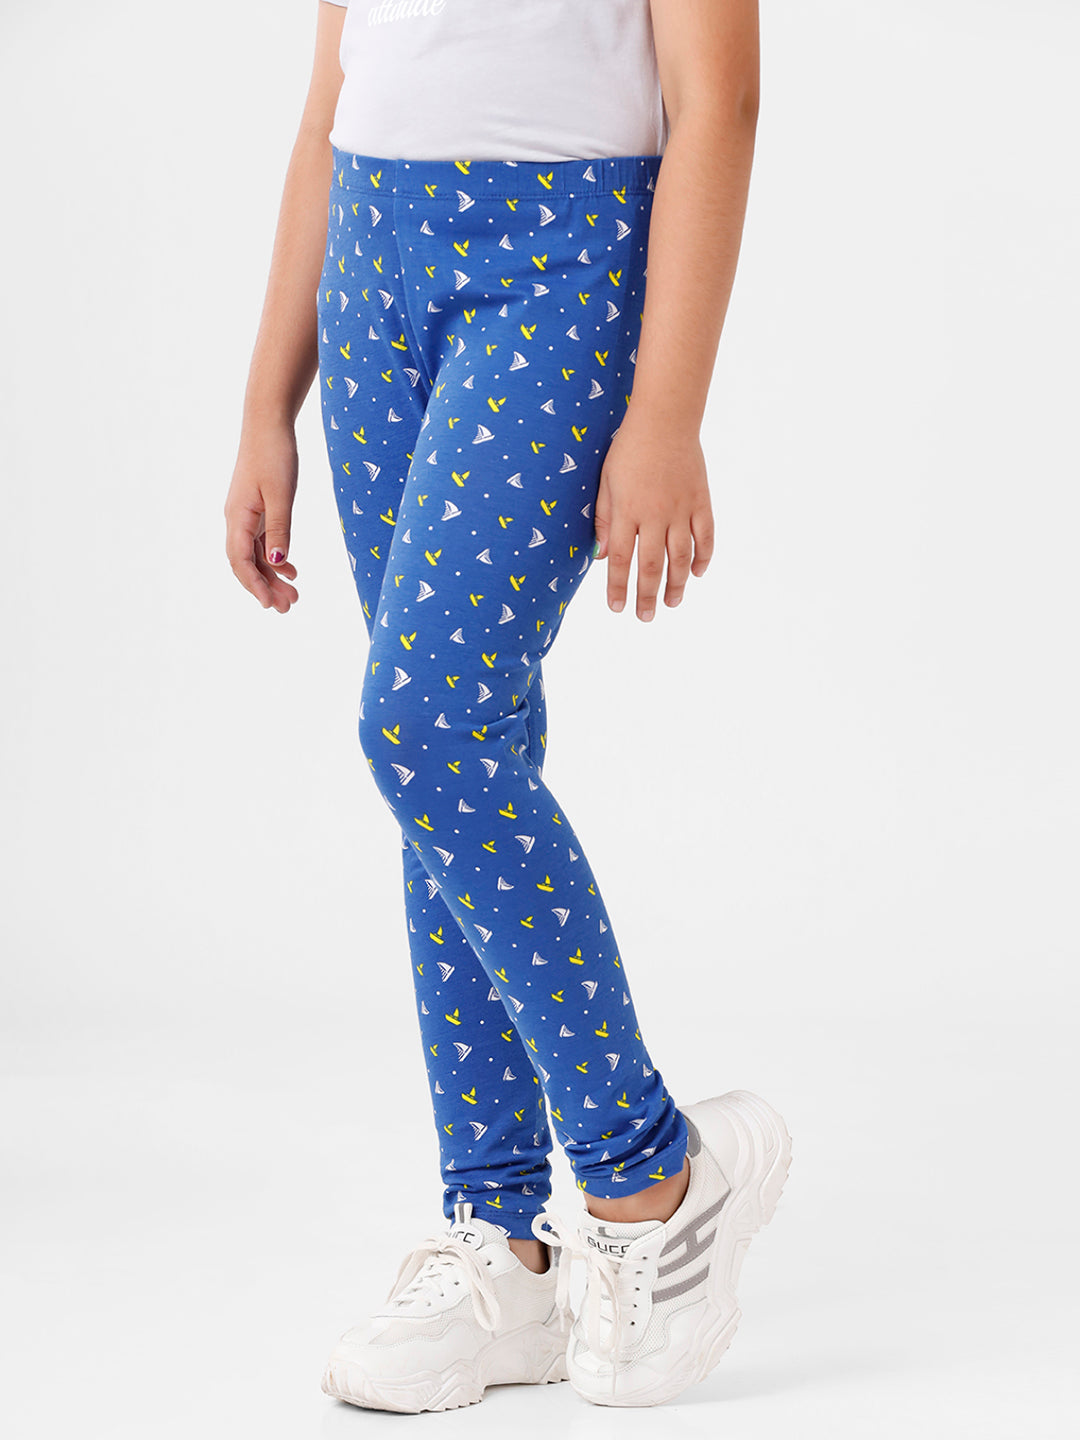 Vivian's Fashions Long Leggings - Girls, Cotton (Royal Blue, Medium) -  Walmart.com